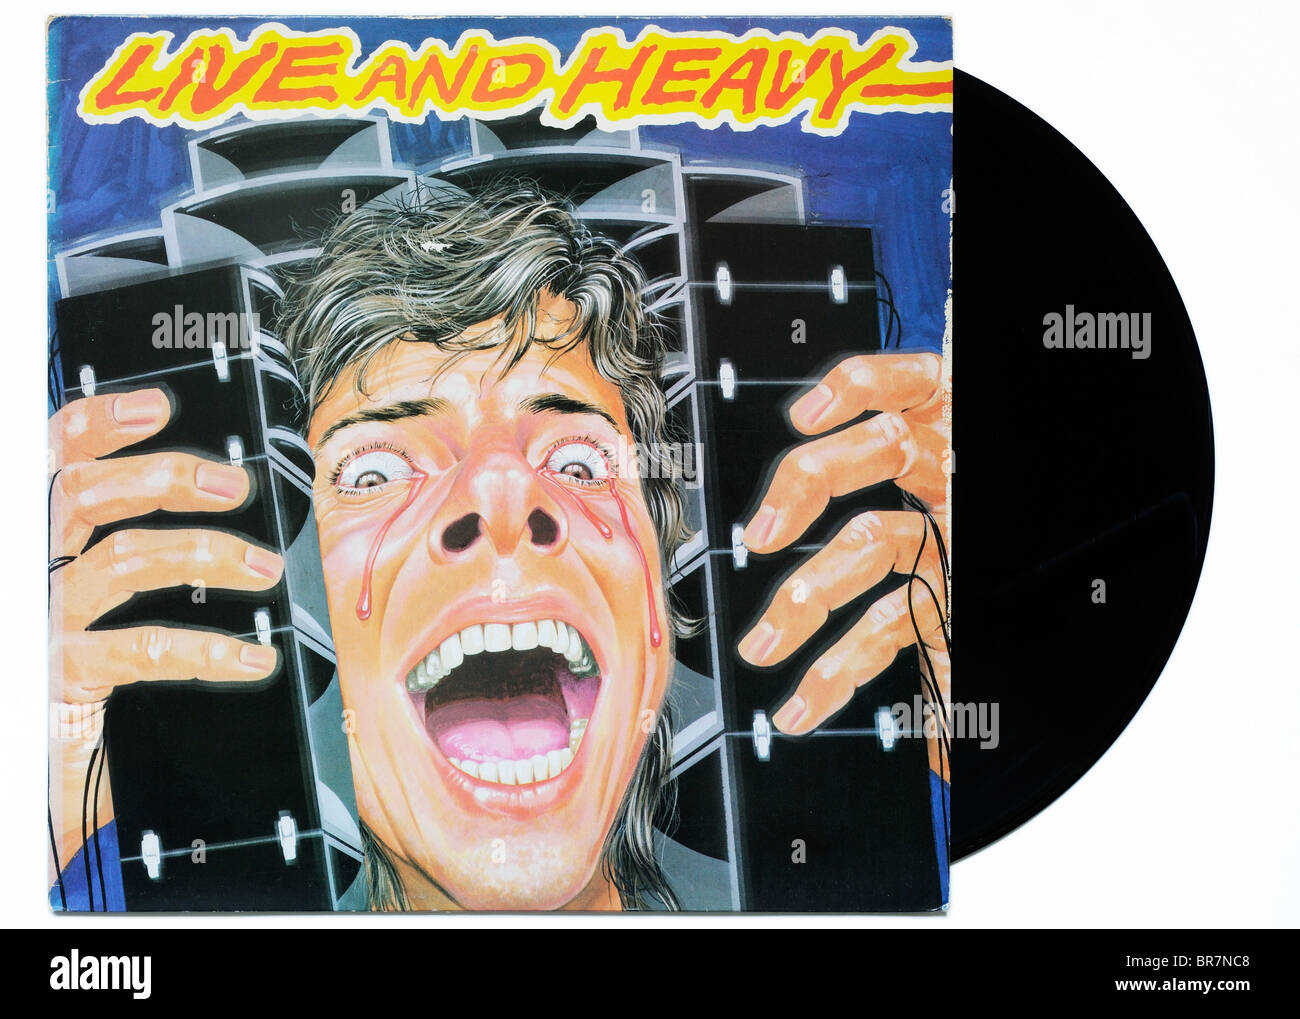 WIZZ - Crazy Games Swedish Heavy Metal 12 LP Vinyl Album Gallery  #vinylrecords